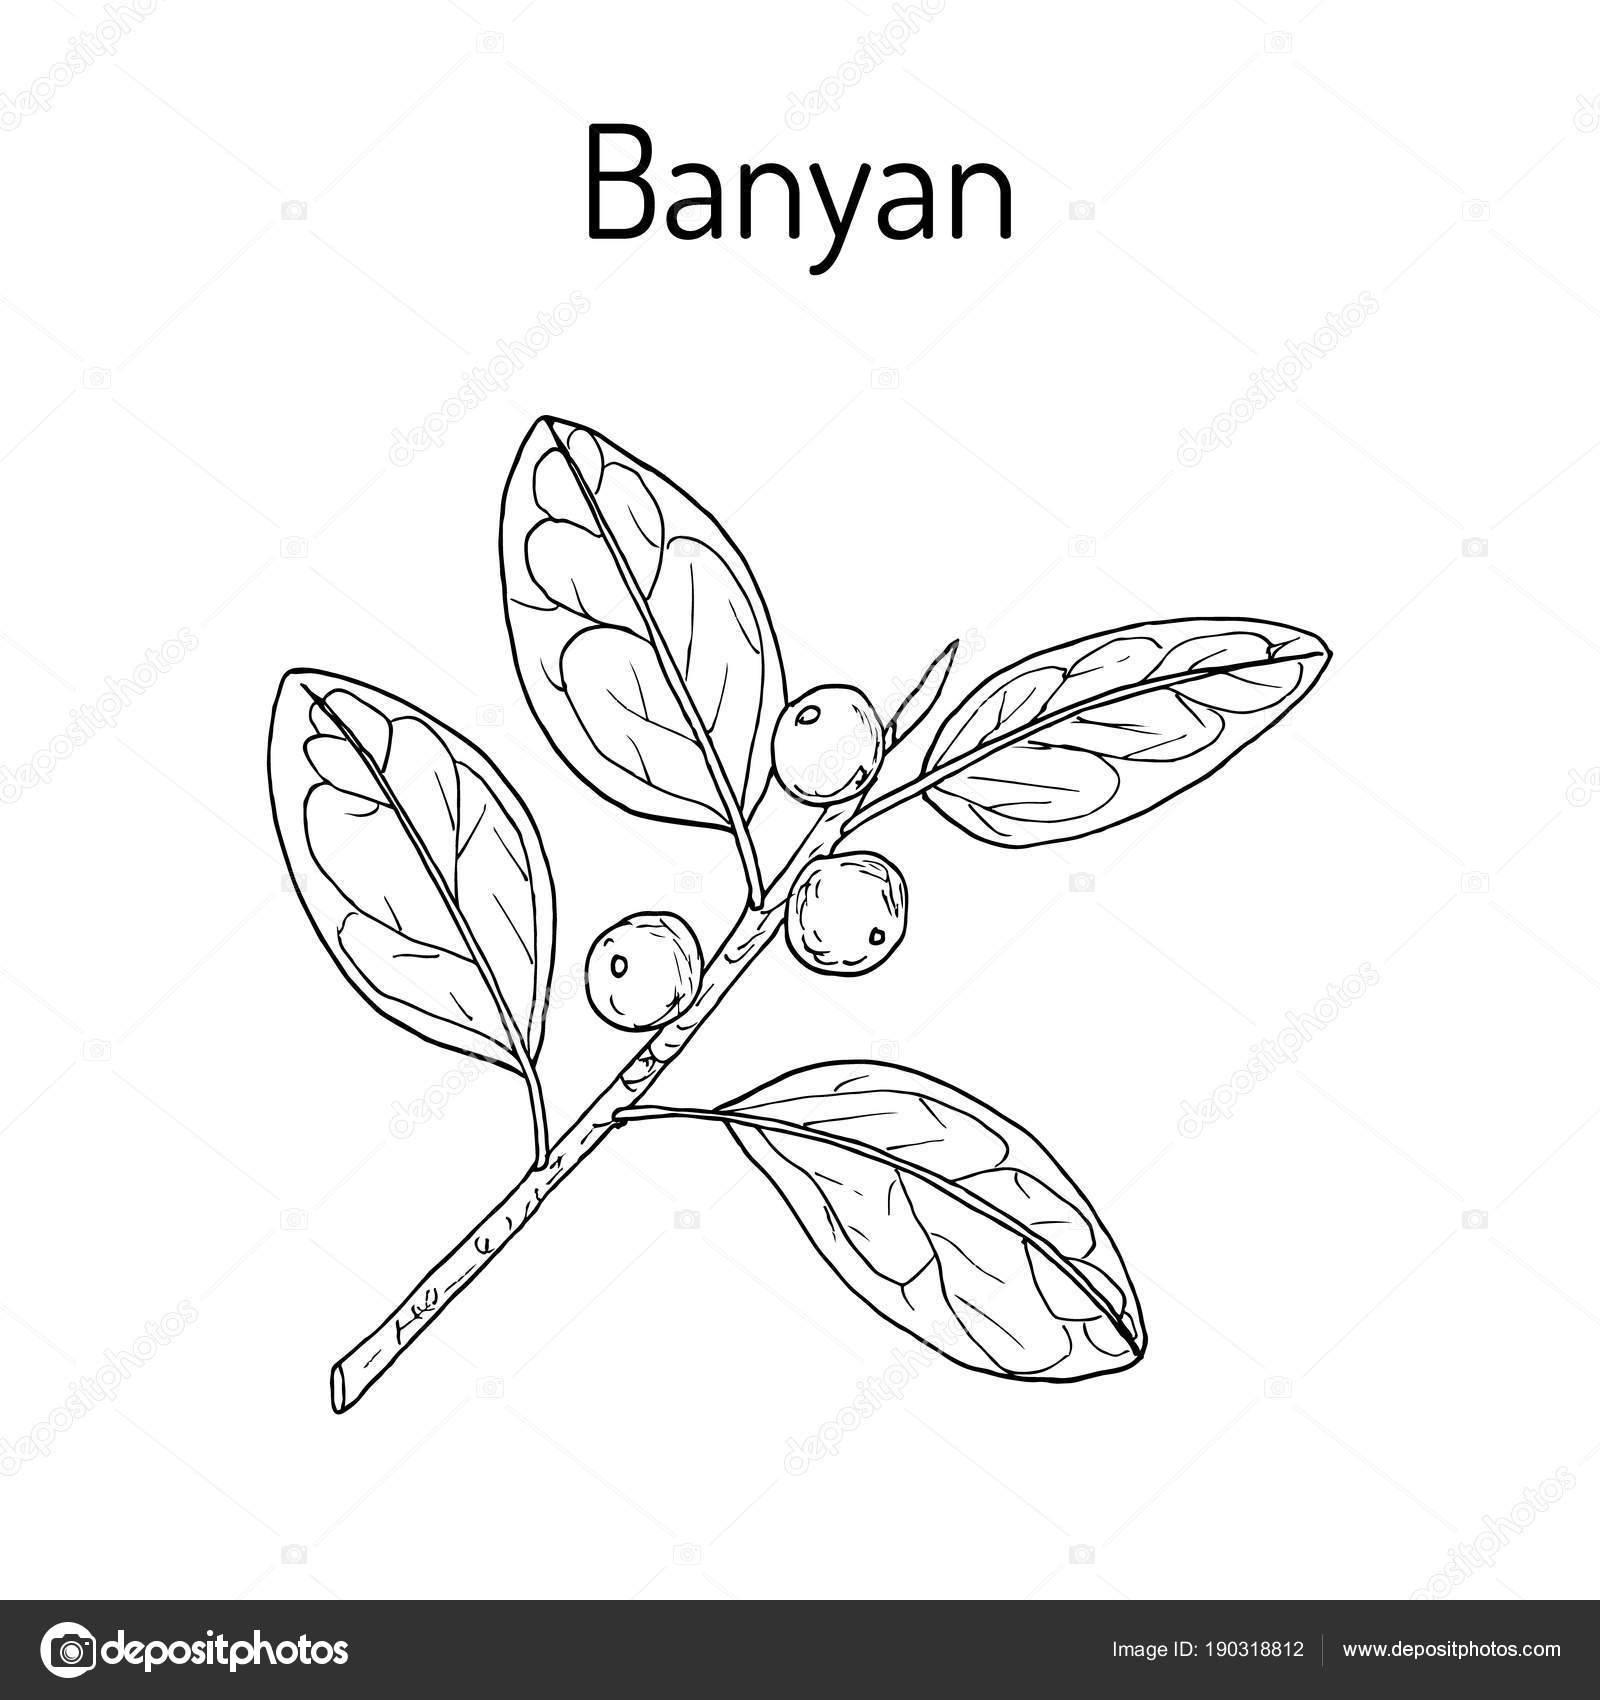 How to do ballpen drawing of a banyan tree is an art tutorial video